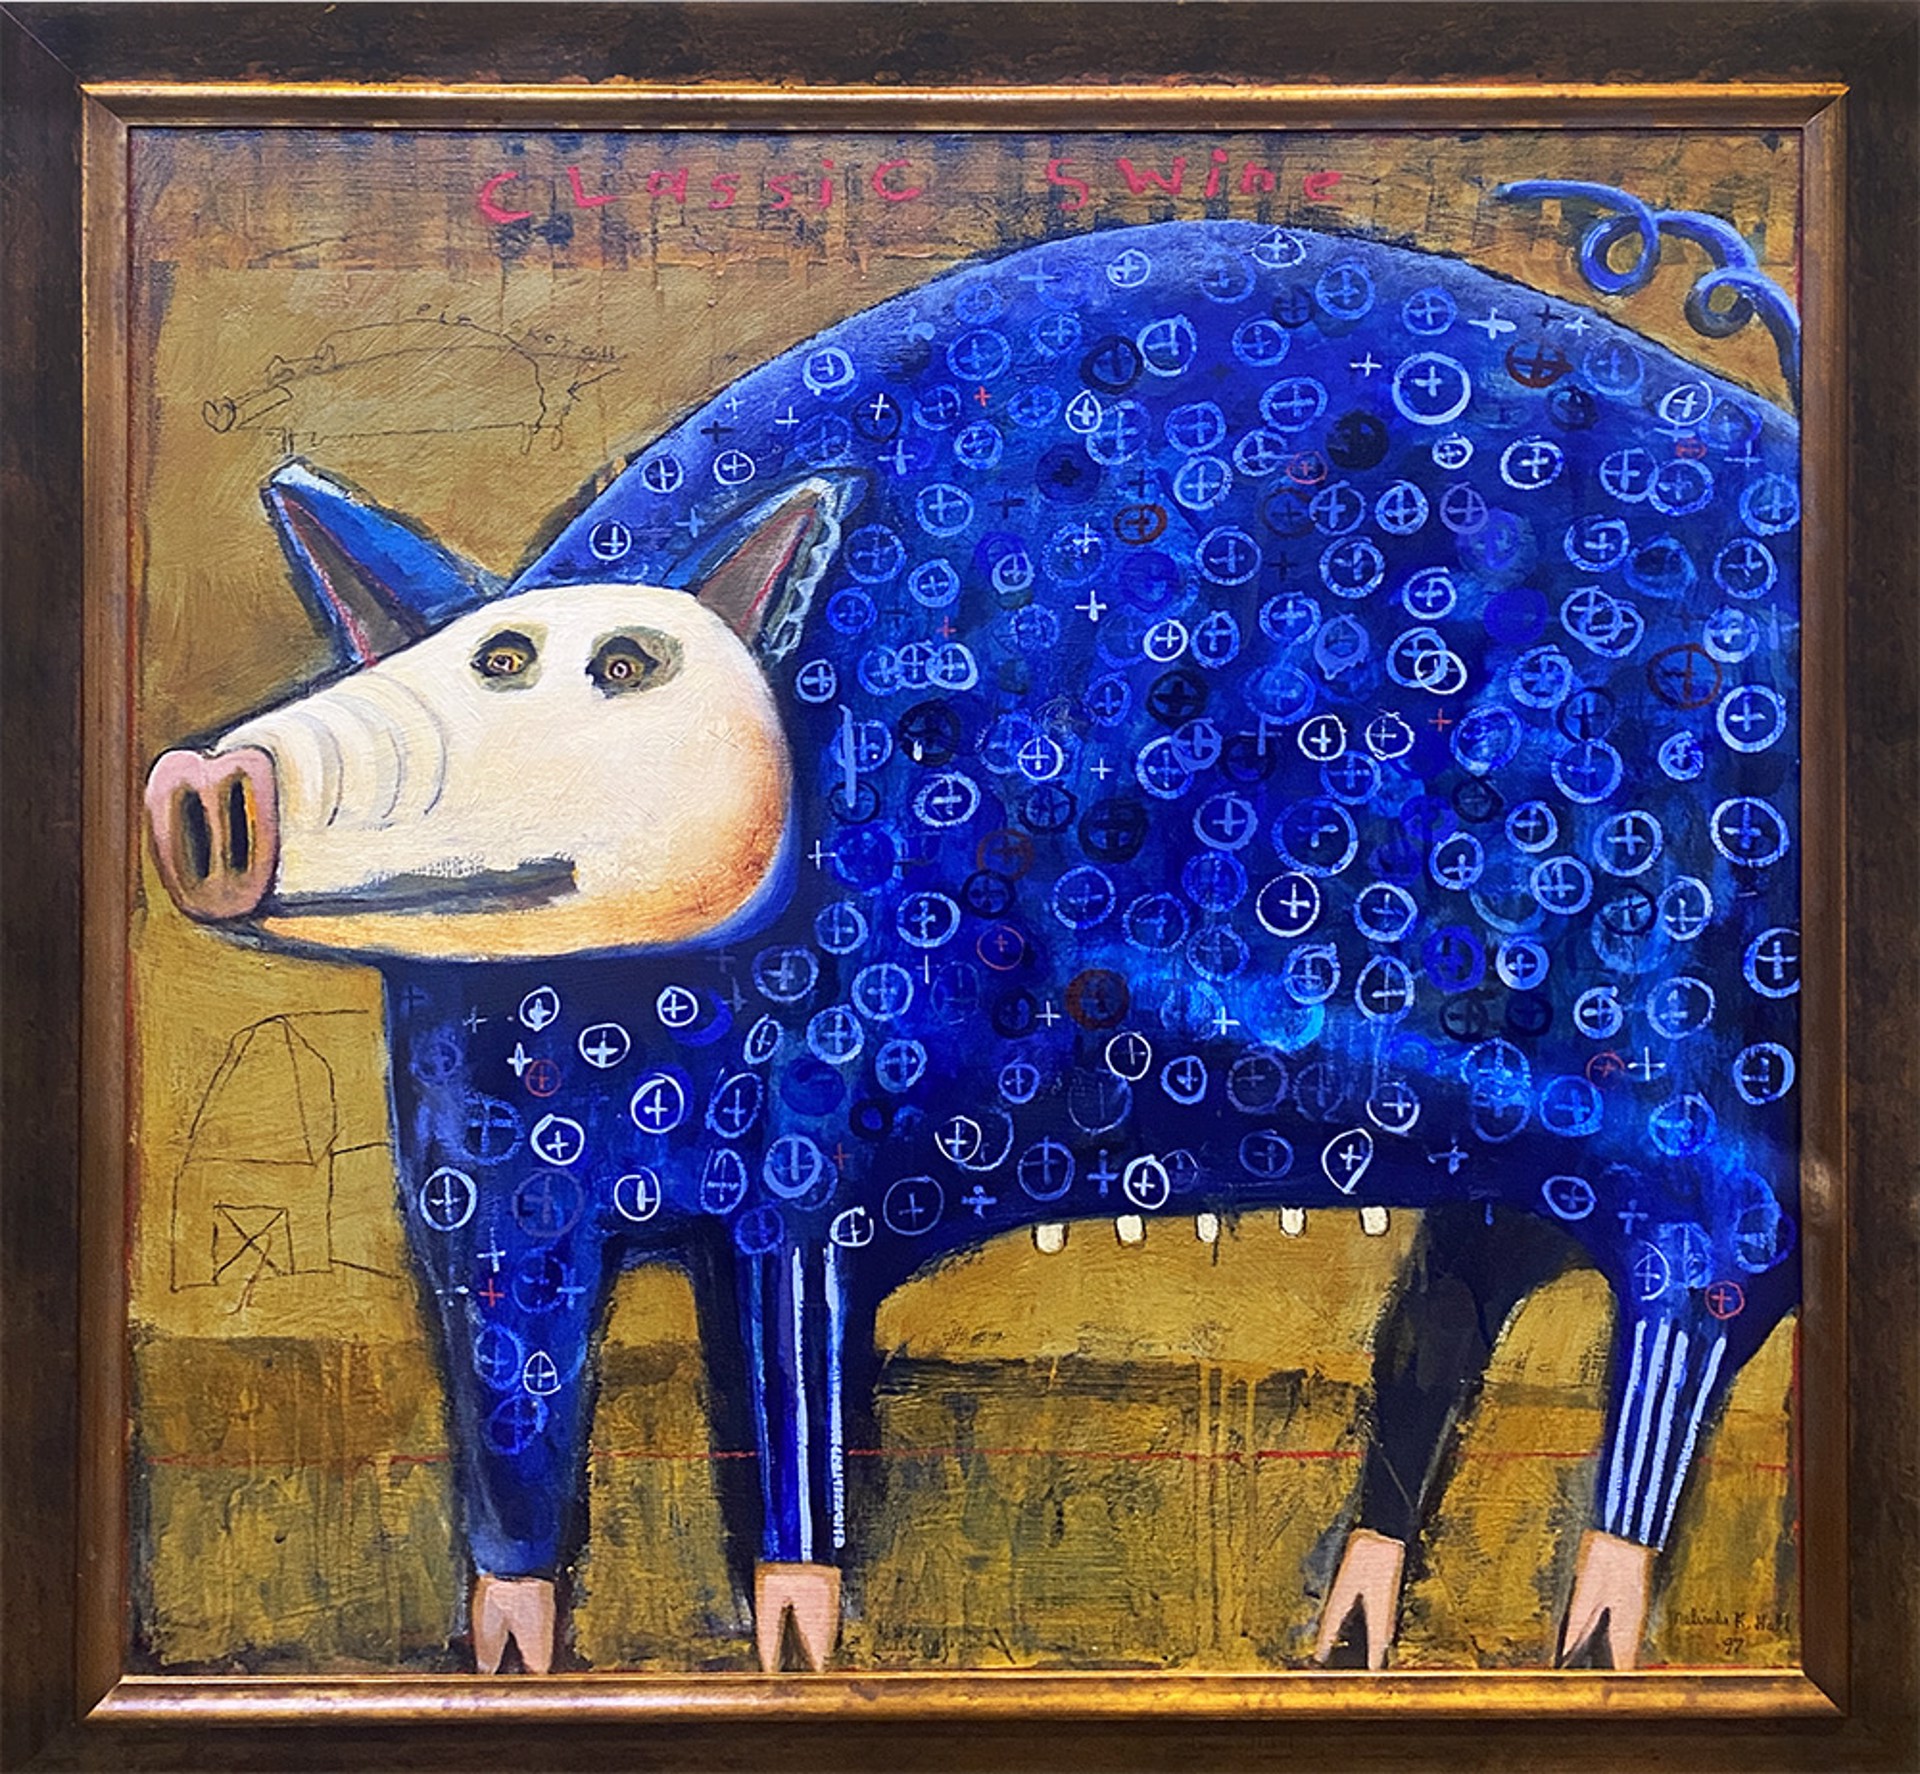 Classic Swine by Melinda Hall